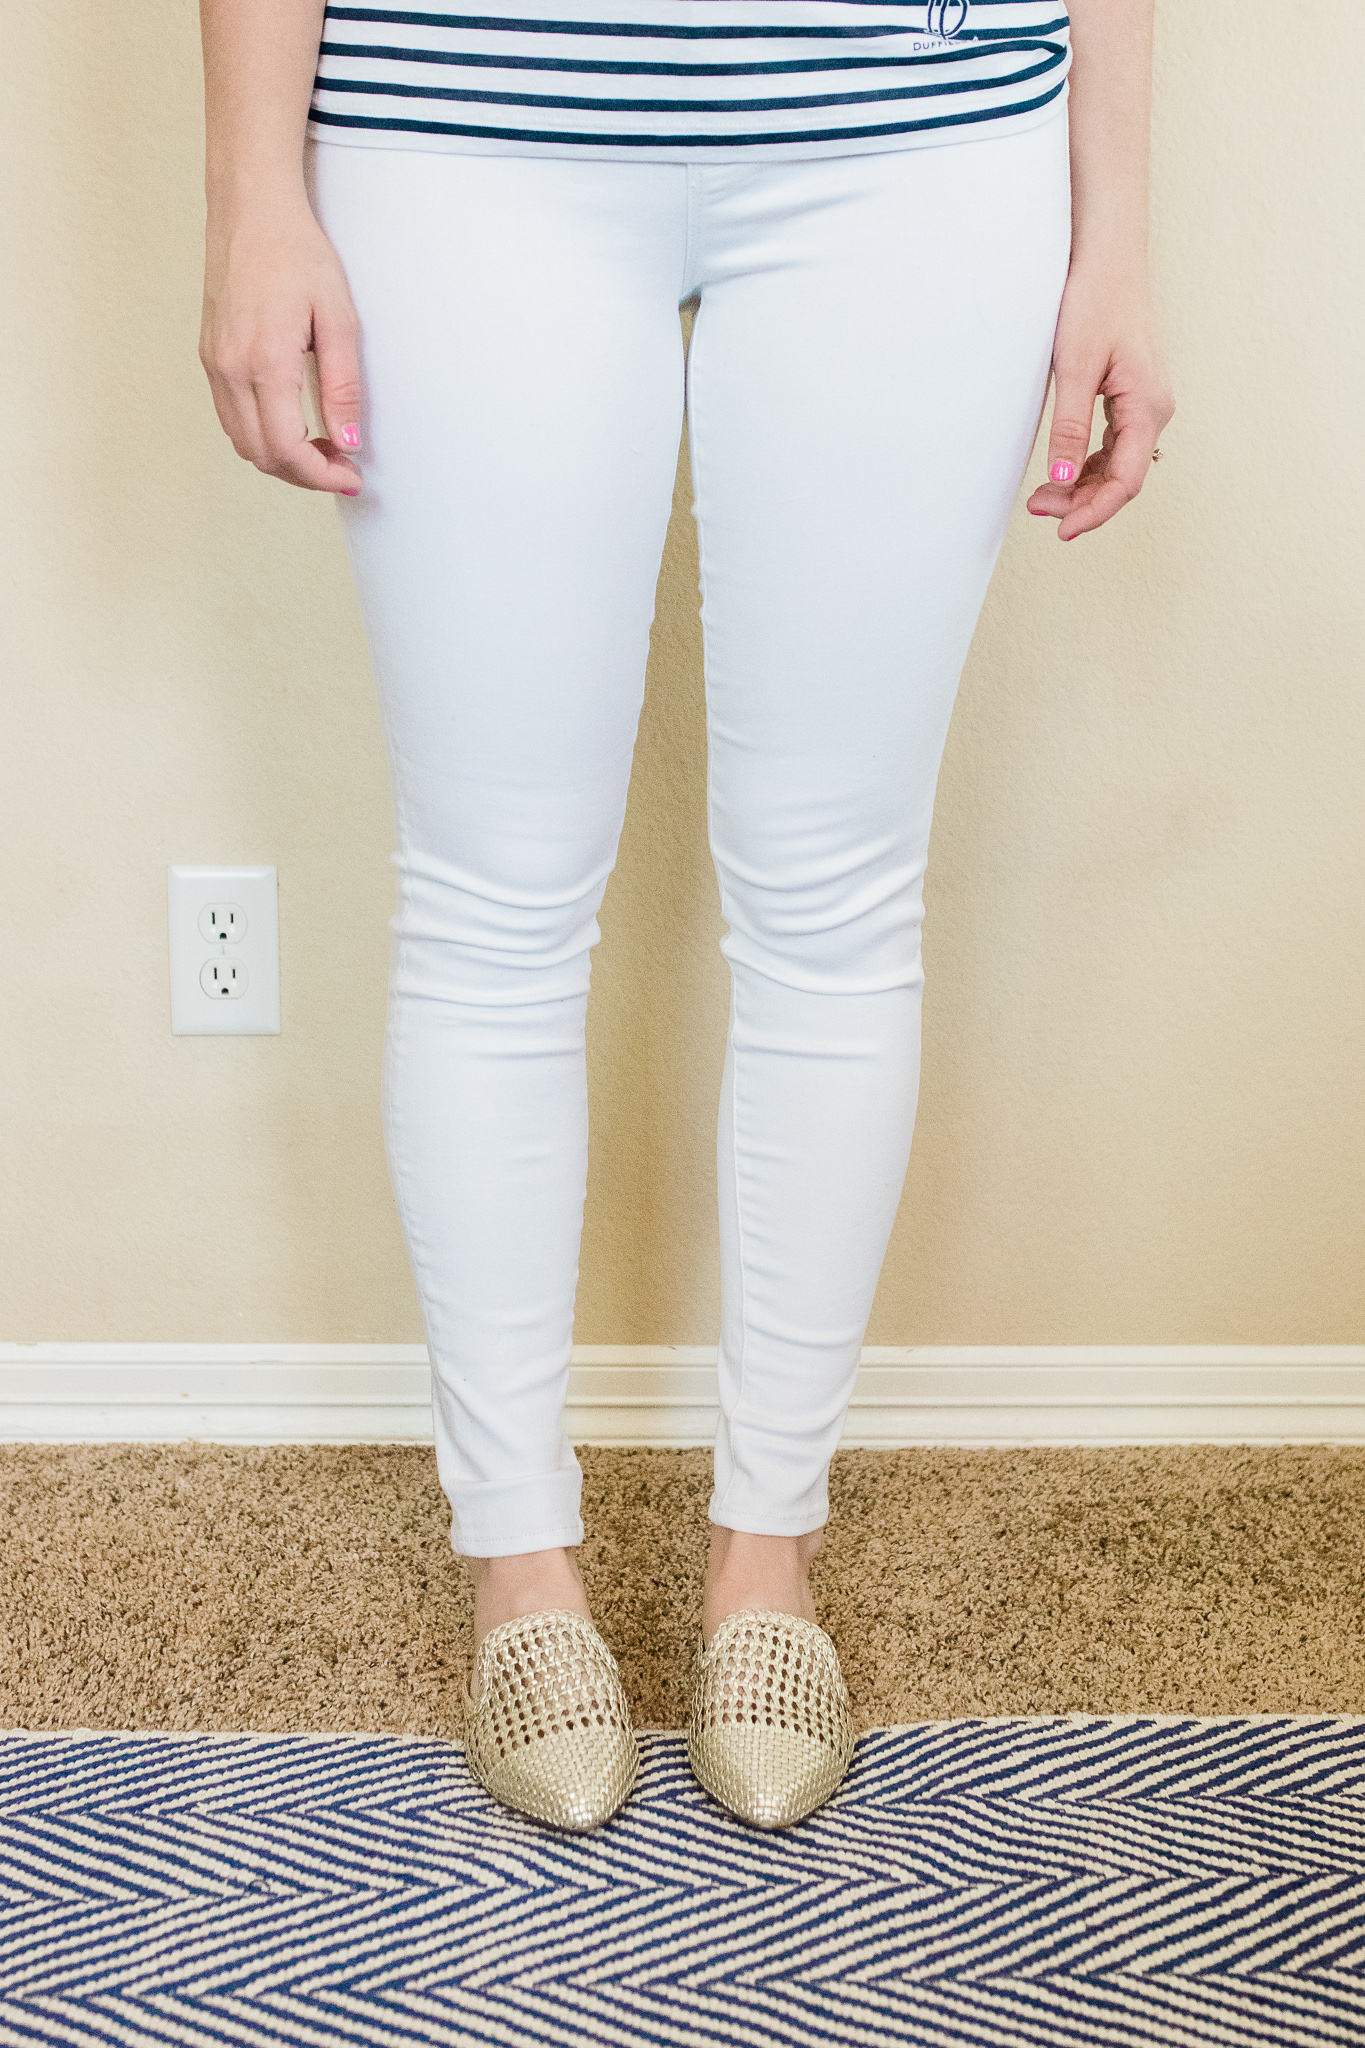 Best White Jeans Under $50 - White Jeans Showdown - Thrifty Pineapple